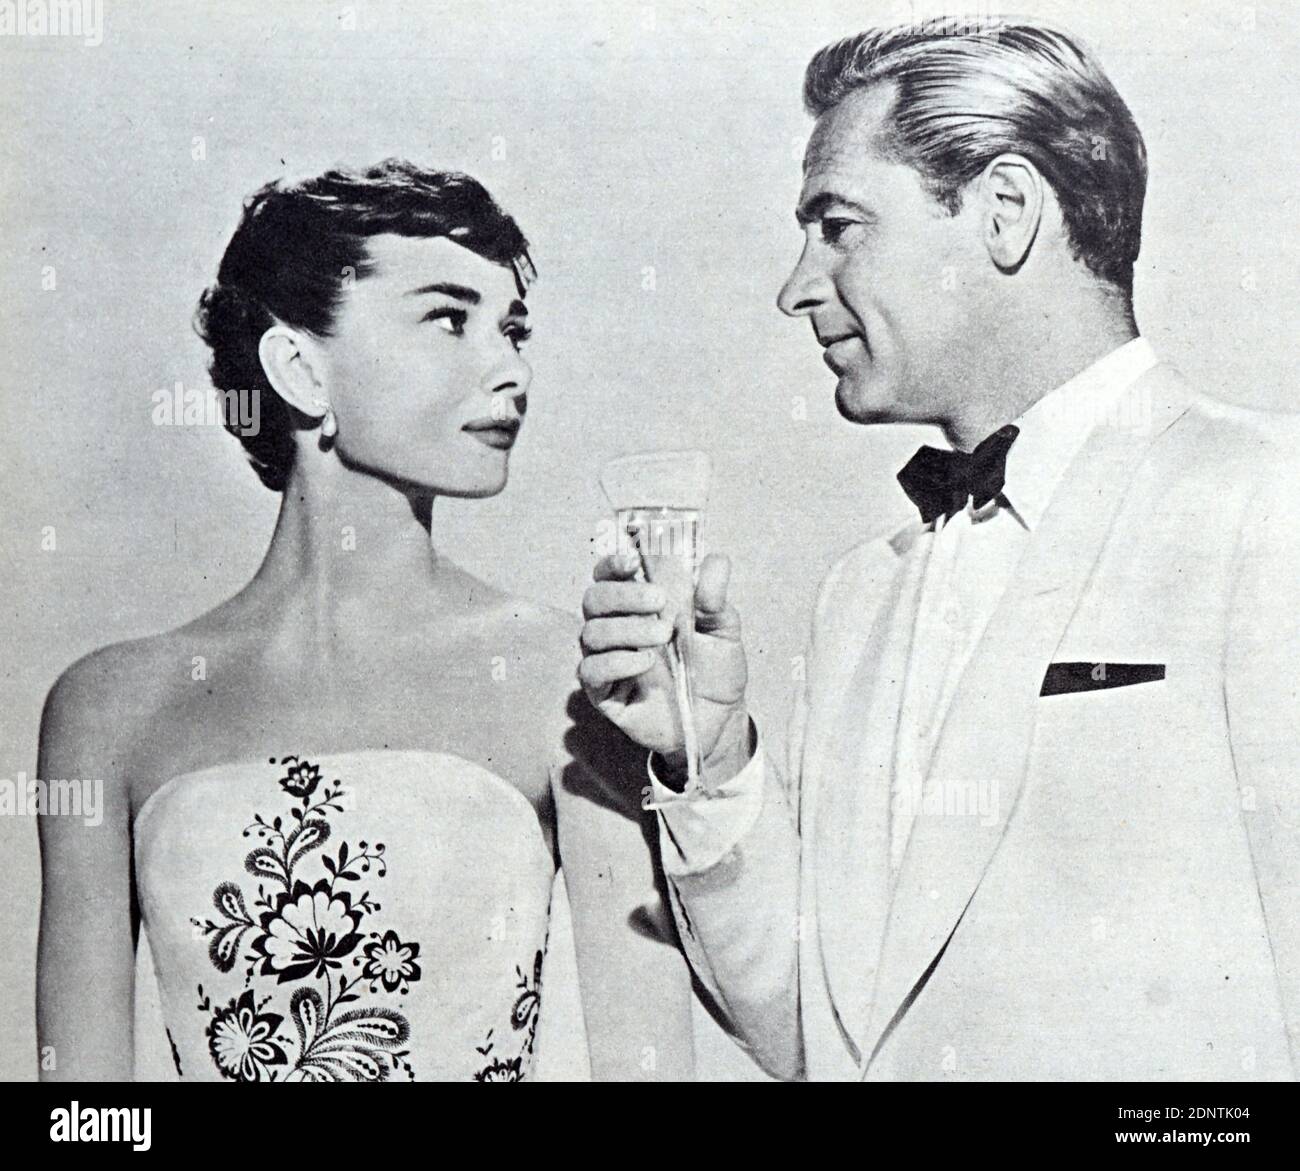 Film still from 'Sabrina' starring Audrey Hepburn, Humphrey Bogart, William Holden, and Walter Hampden. Stock Photo